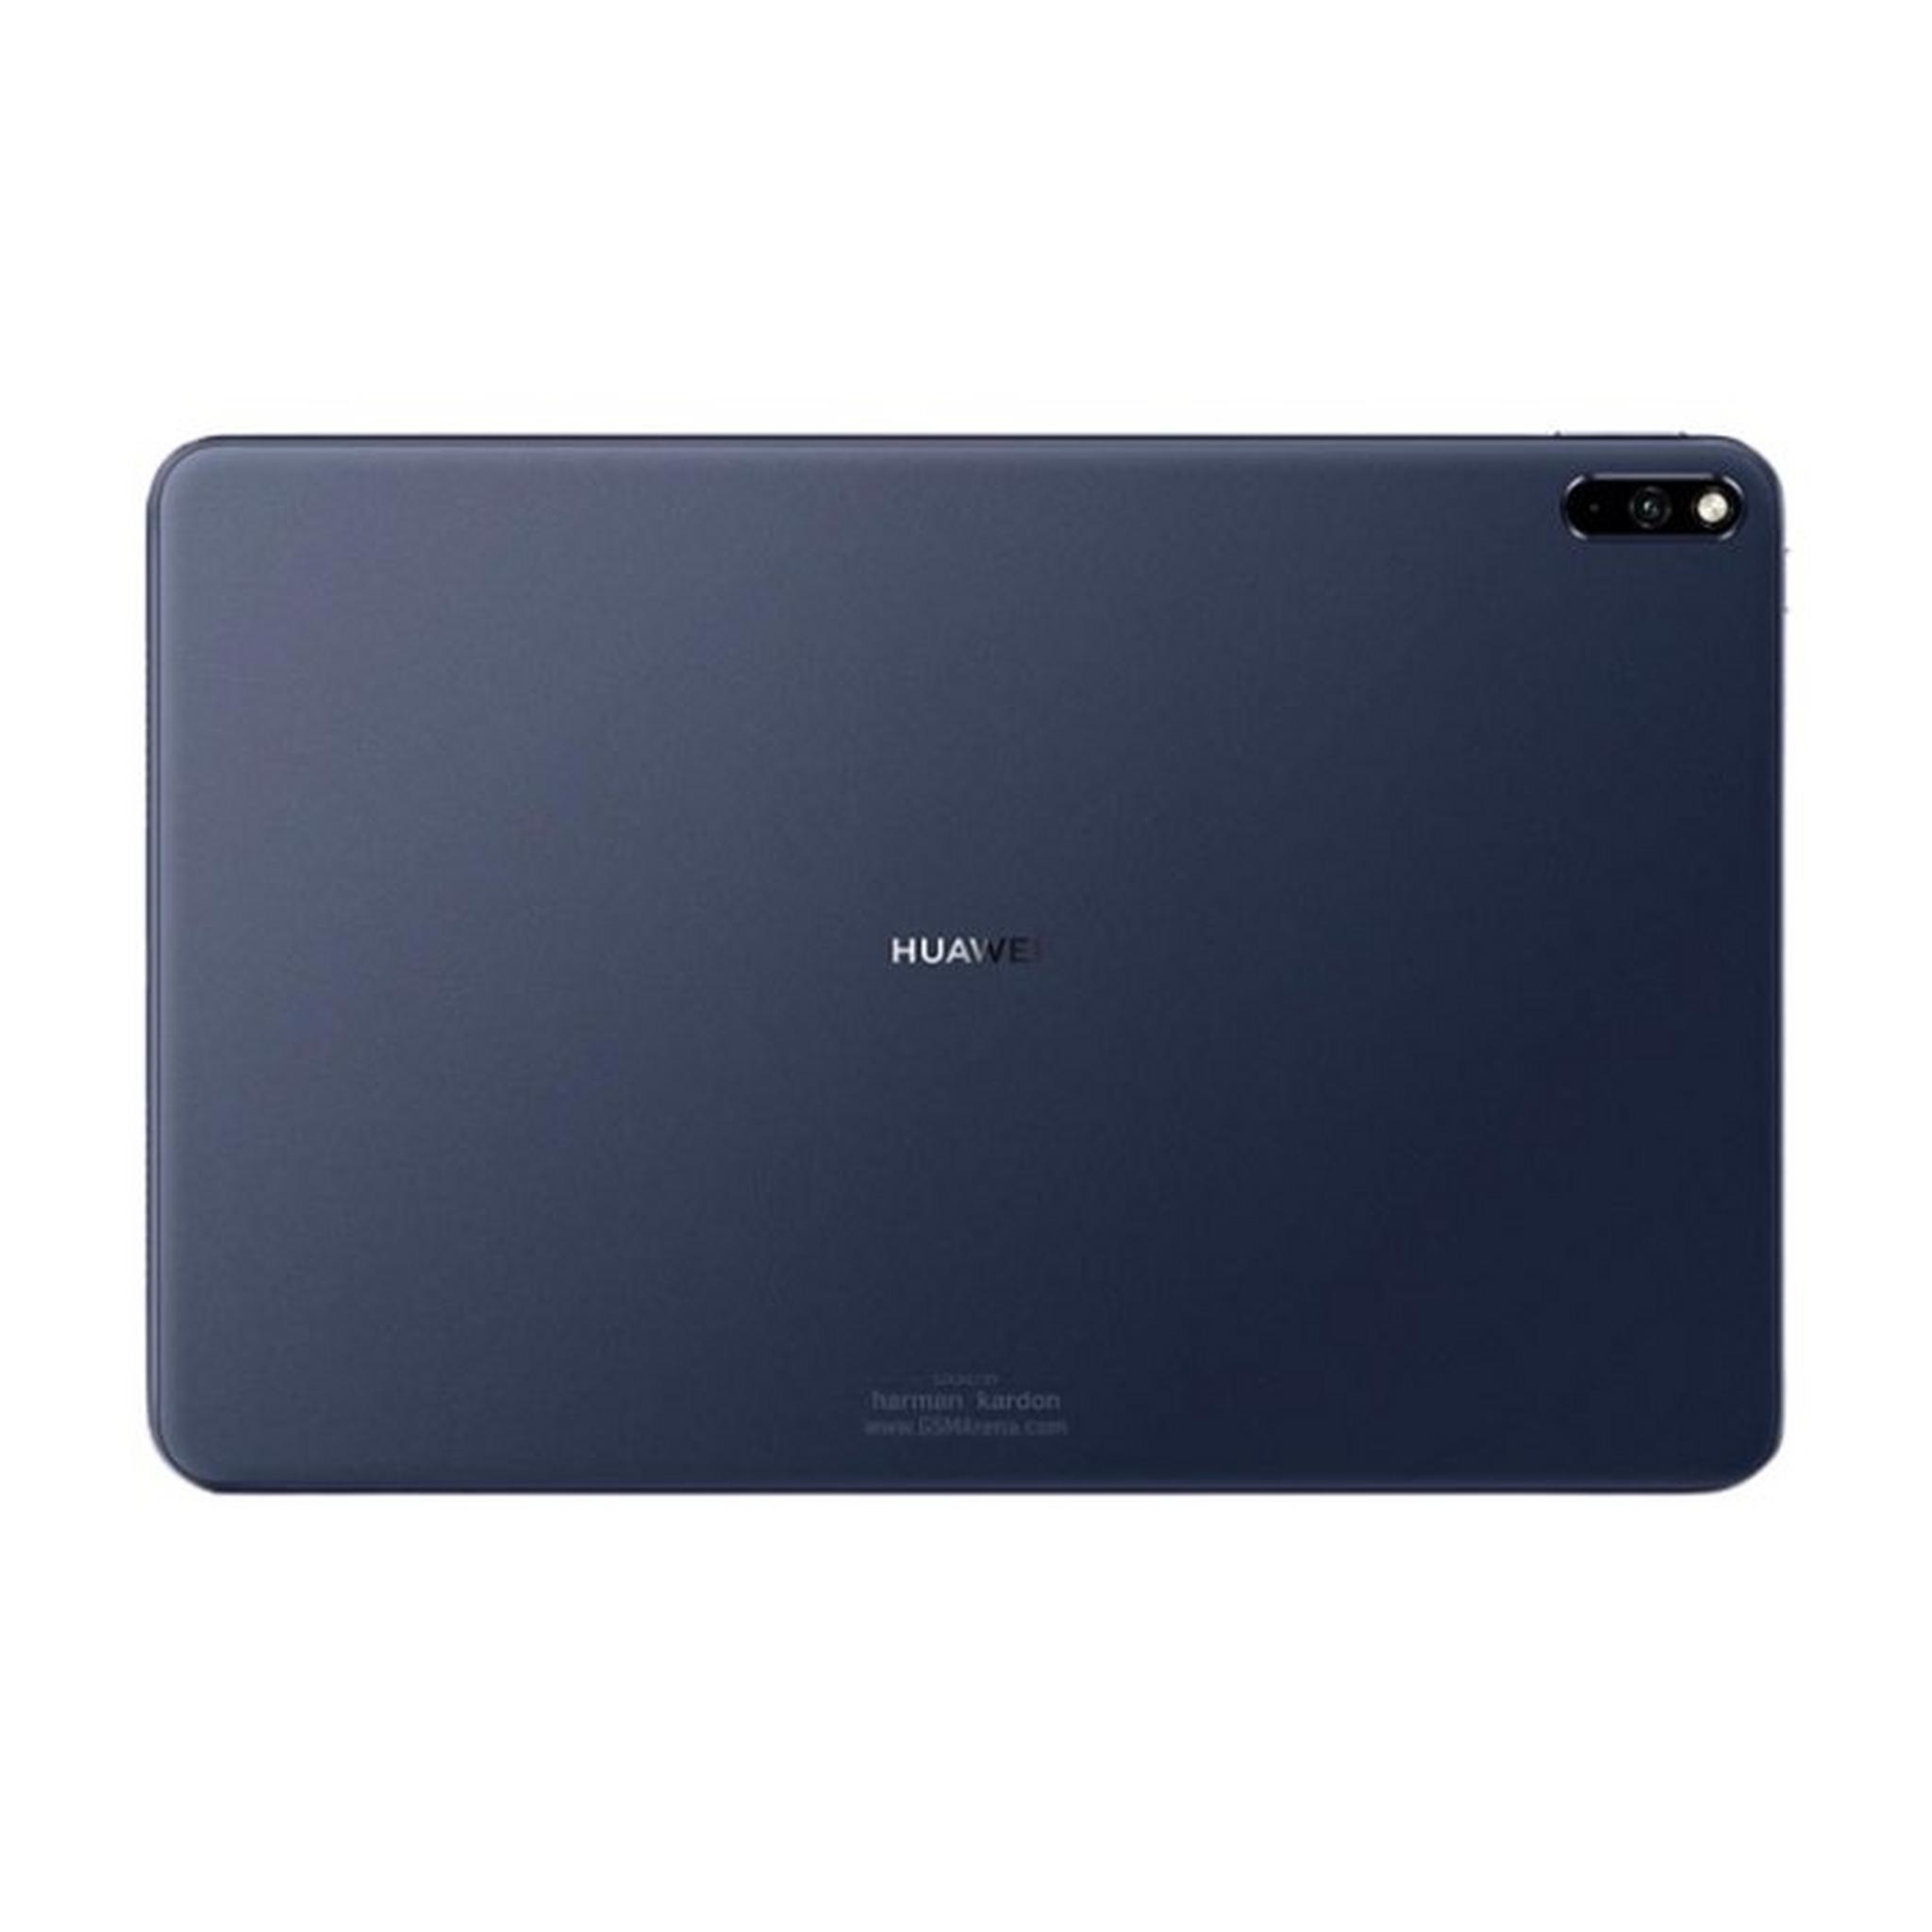 Huawei MatePad Pro 256GB 4G Tablet - Grey